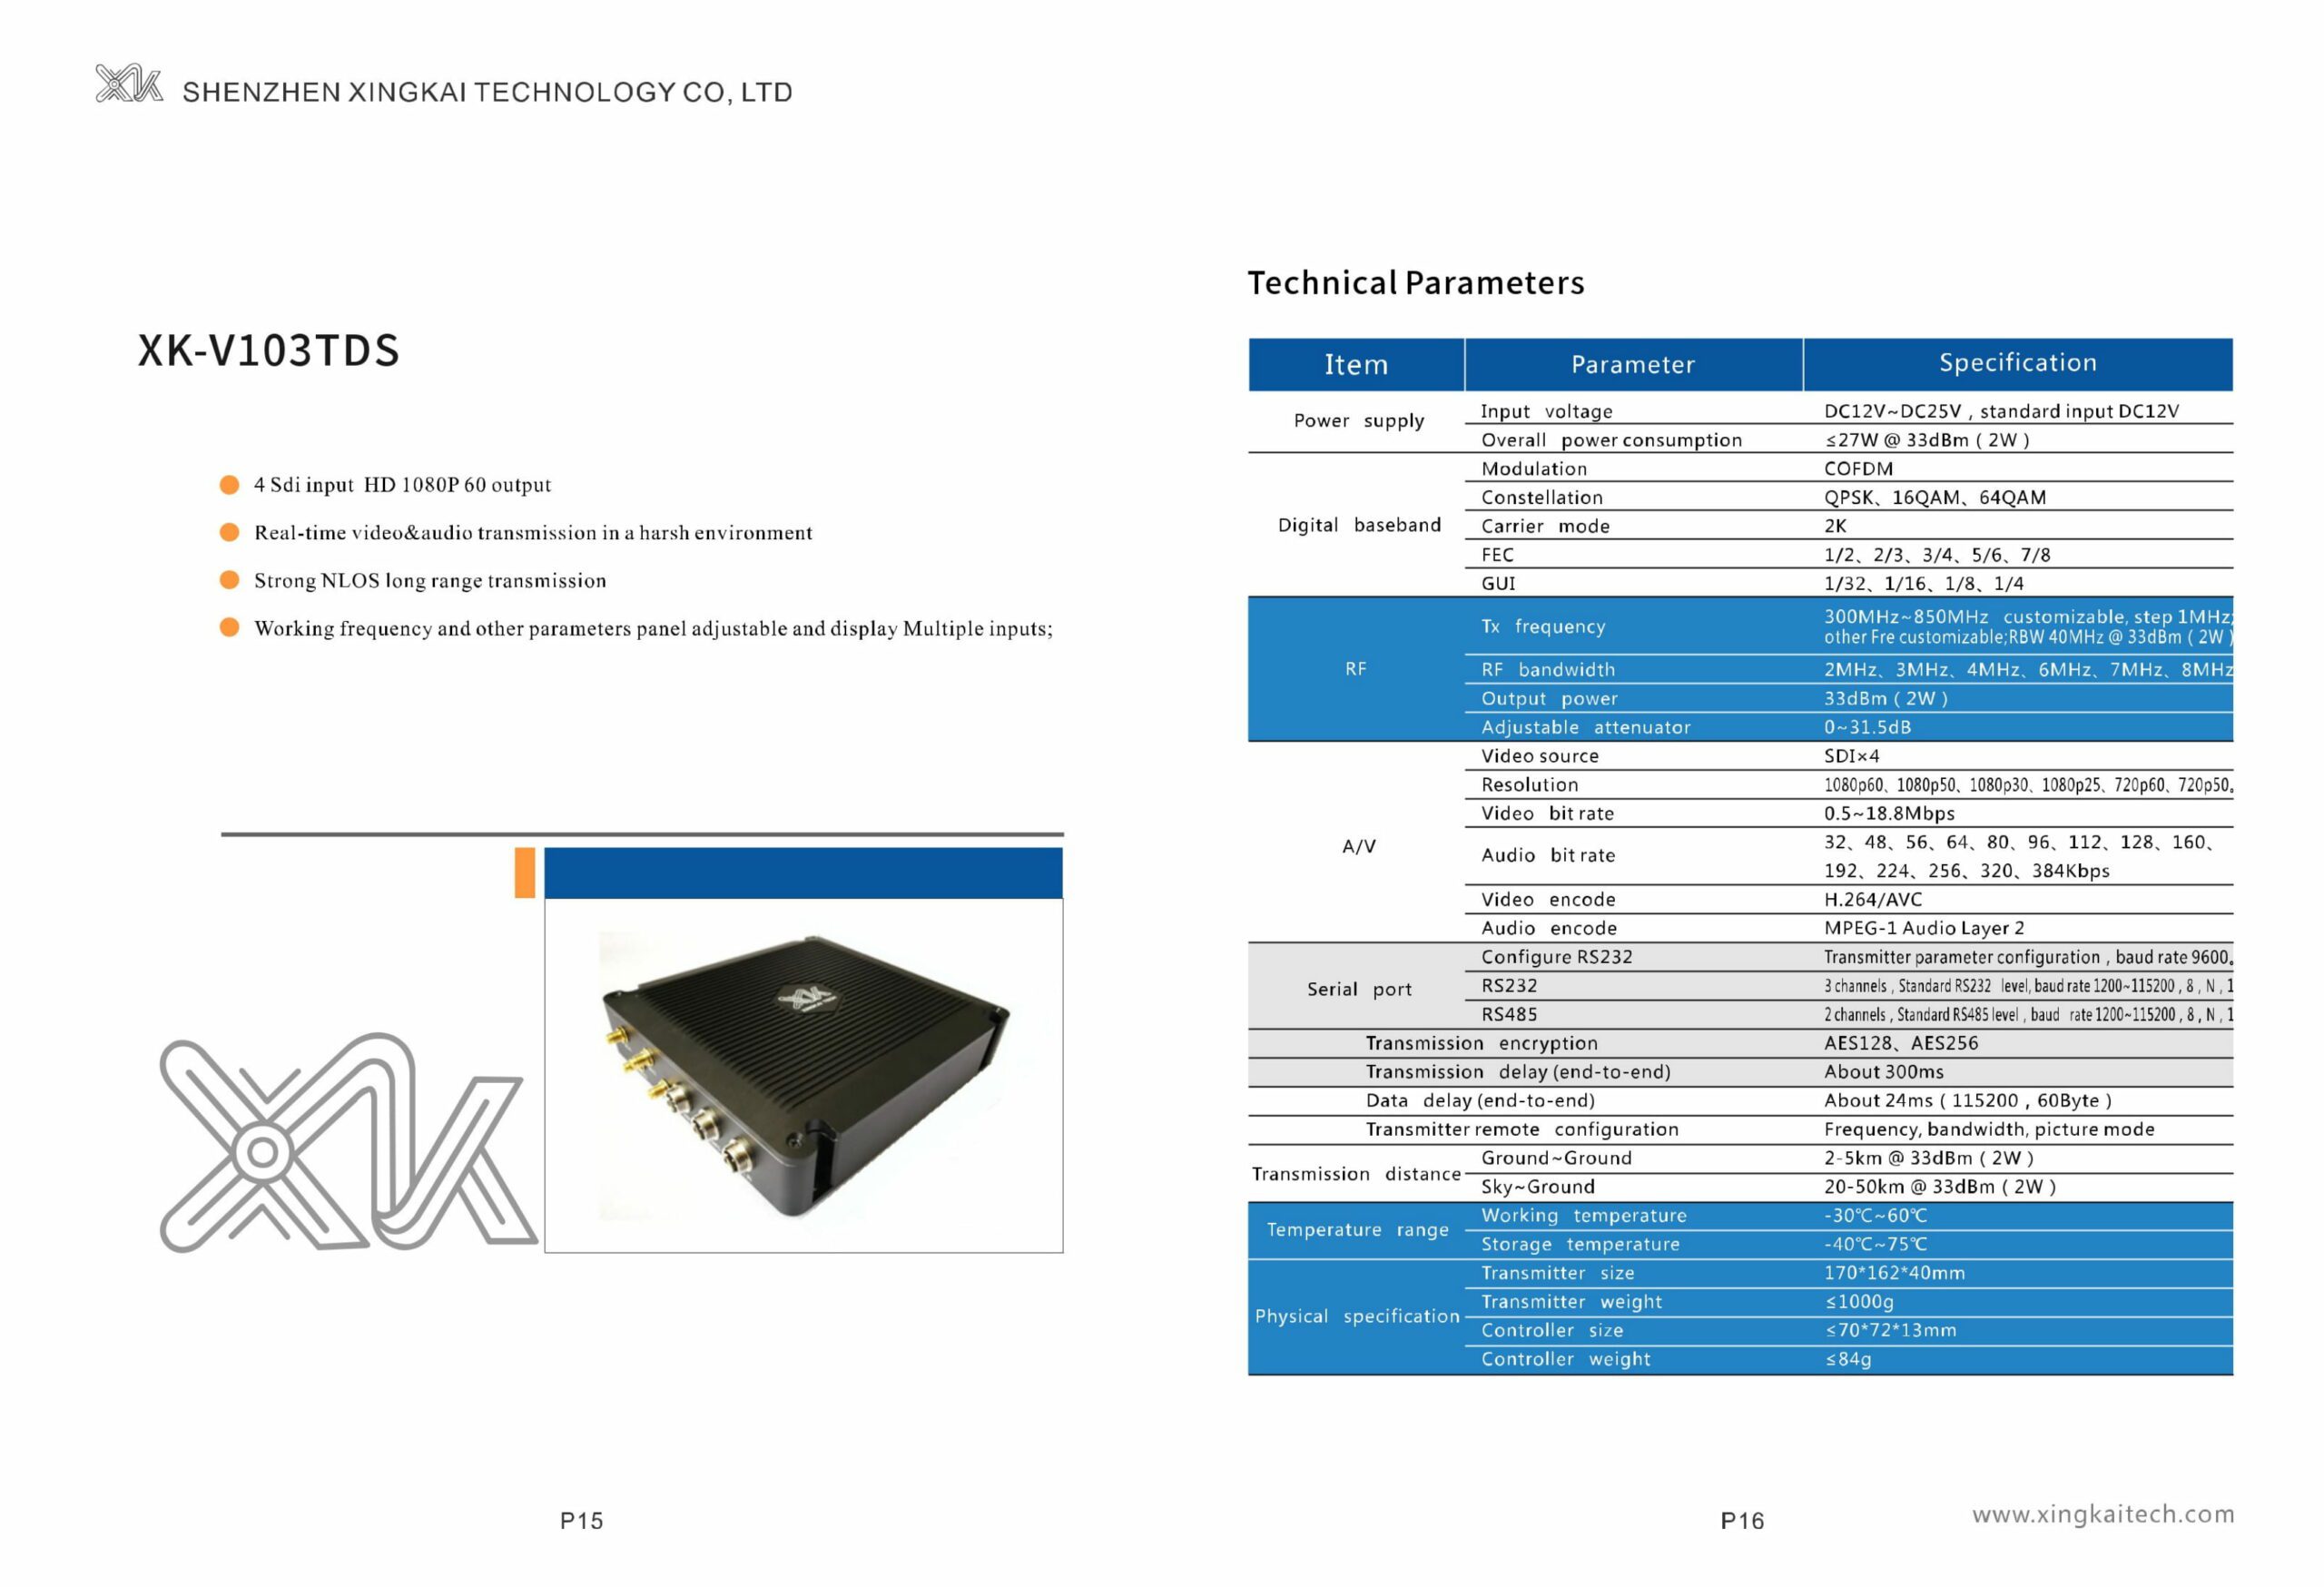 Catalogue Of Shenzhen Xingkai Technology Co. Ltd 09 Scaled